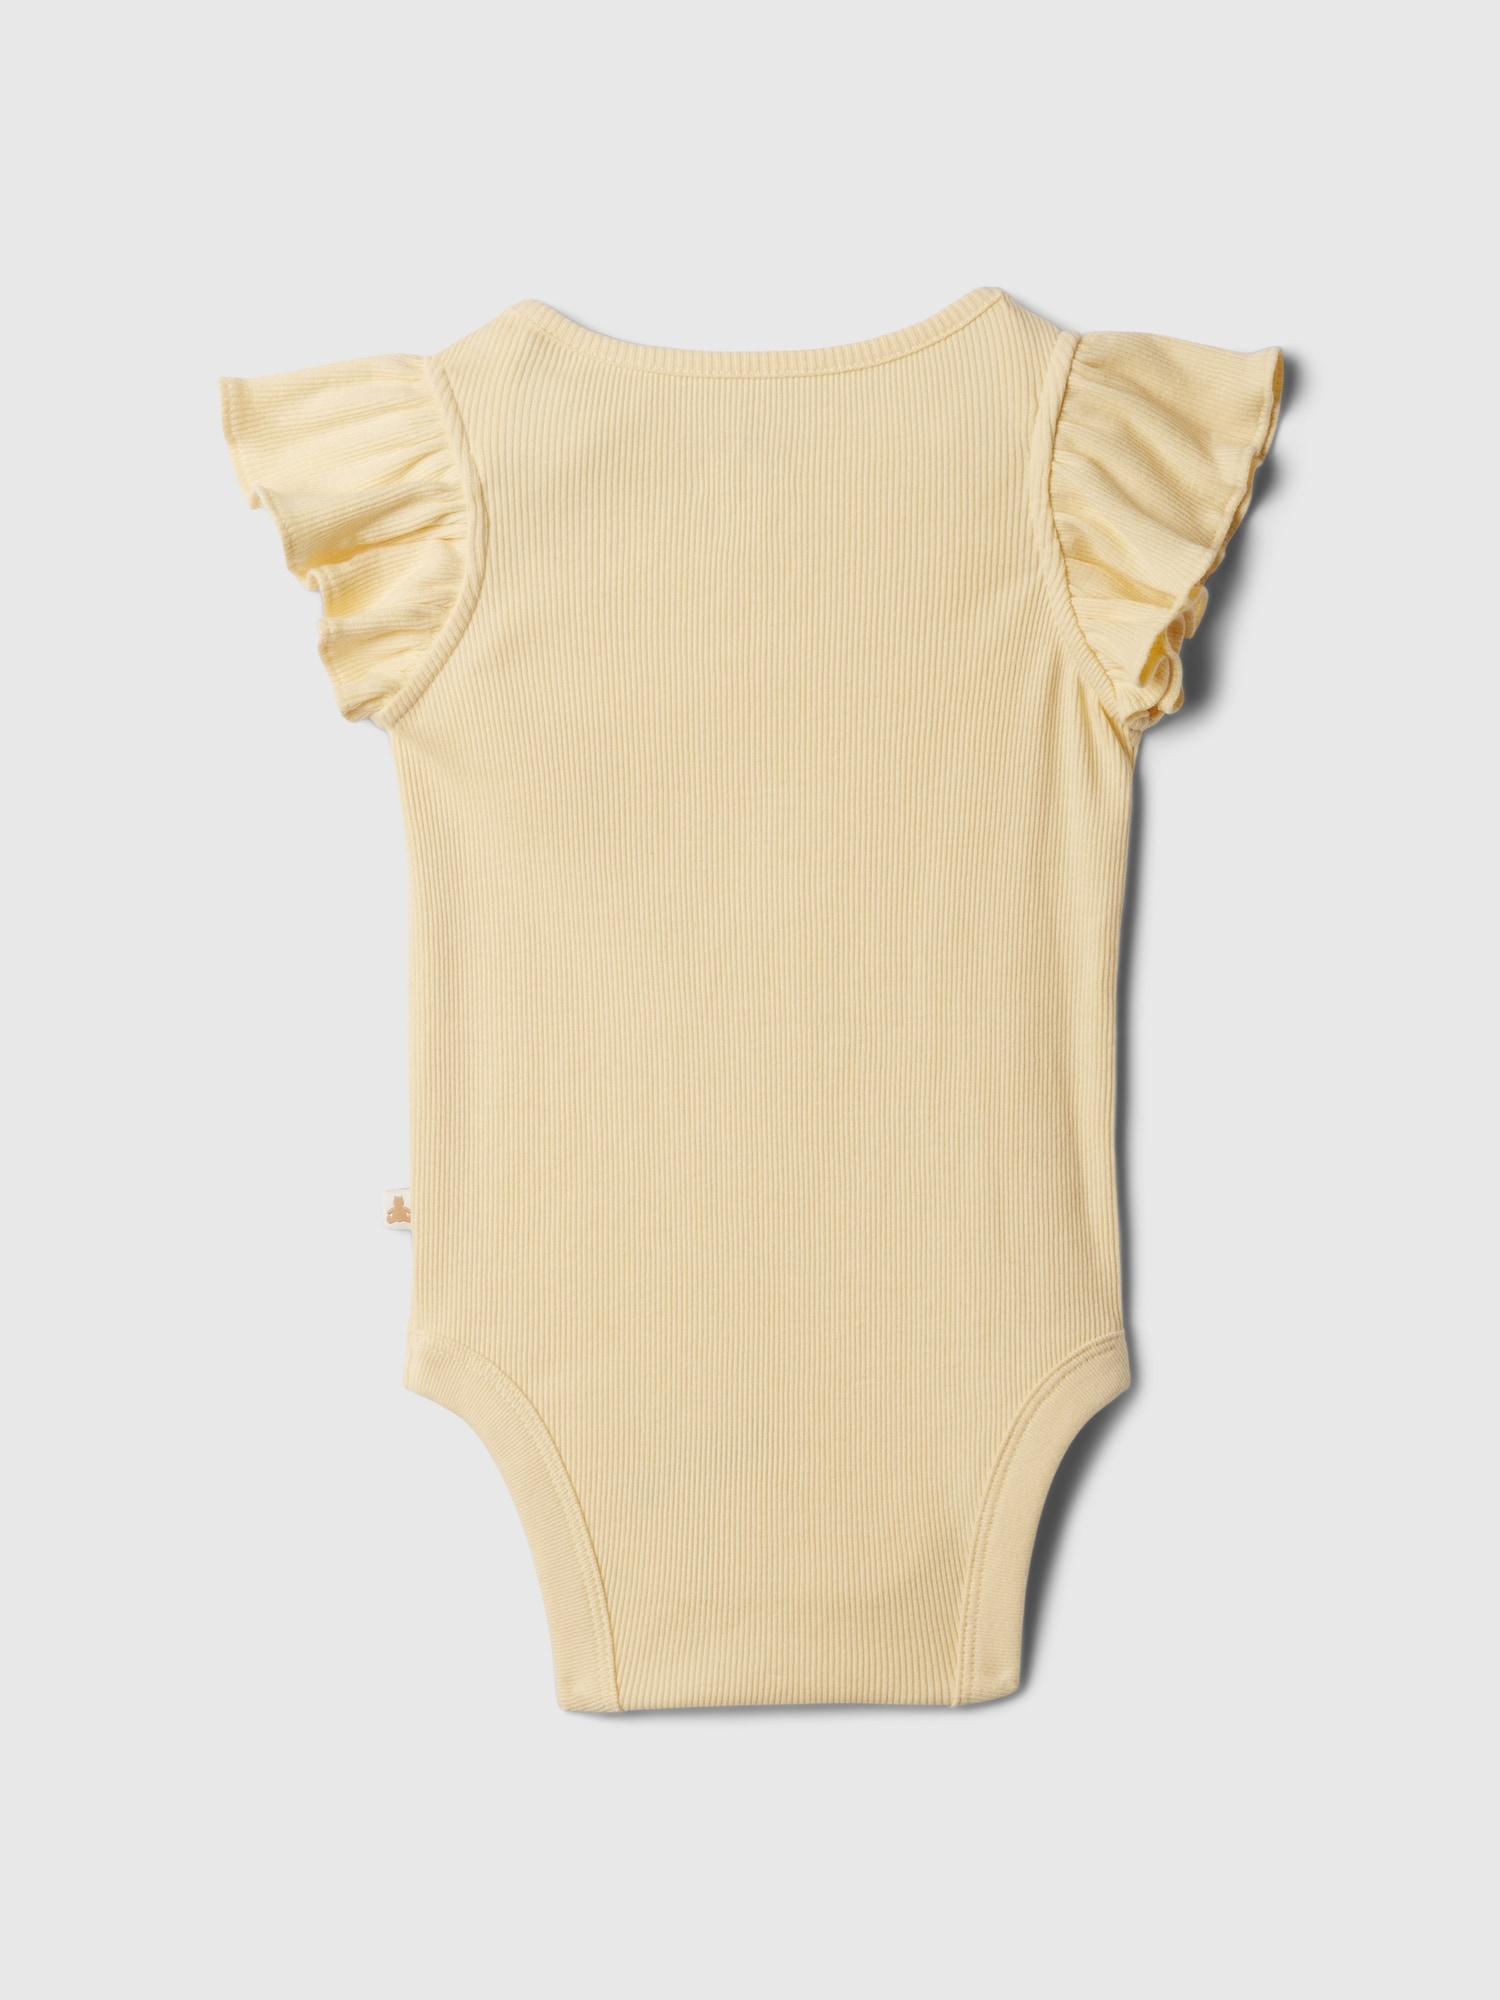 babyGap Mix and Match Ruffle Bodysuit | Gap